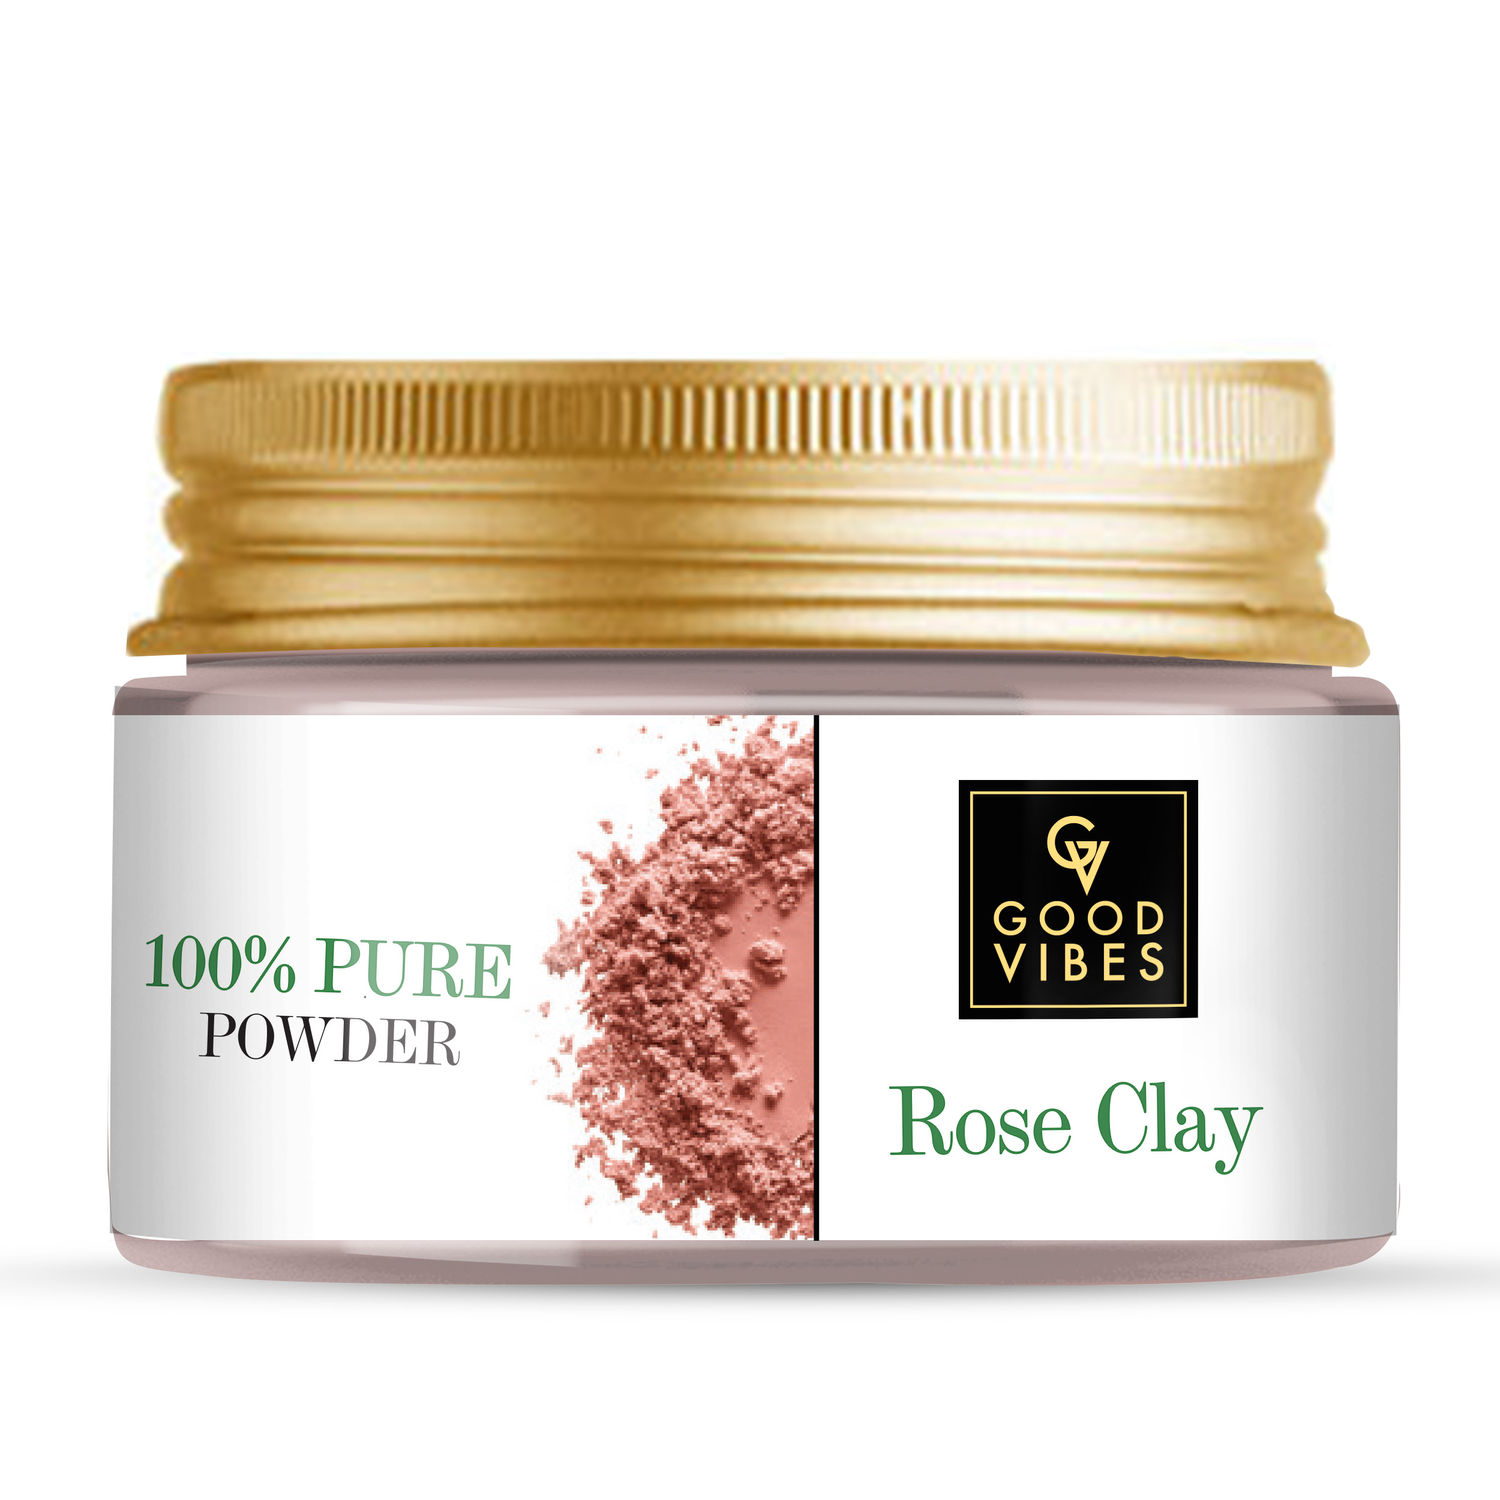 Good Vibes Powder - Rose Clay (30 gm)